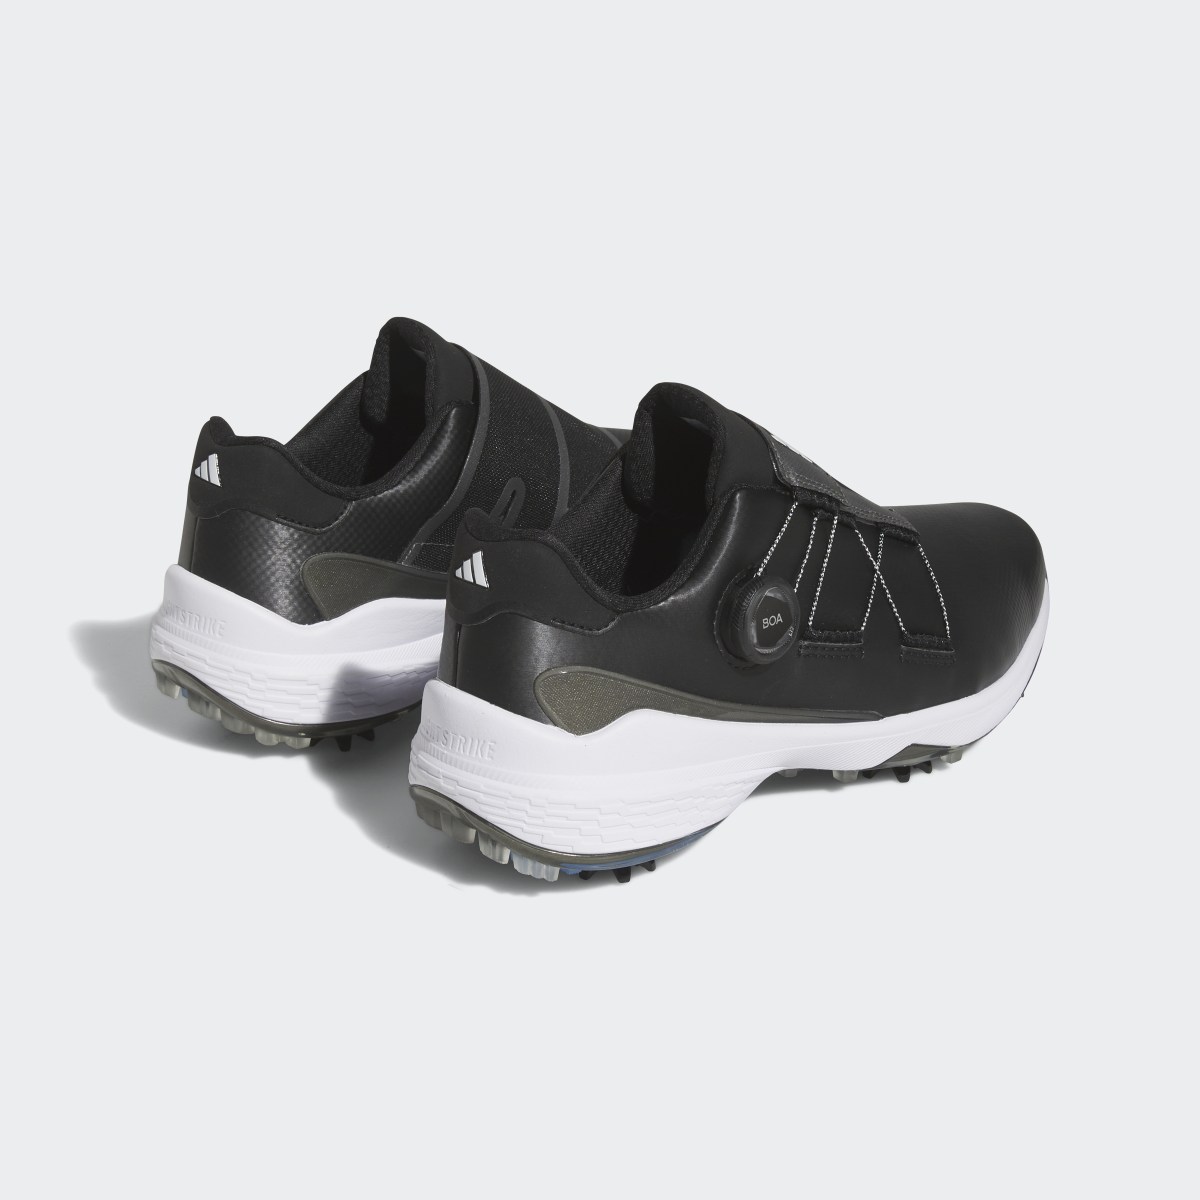 Adidas ZG23 BOA Lightstrike Golf Shoes. 6